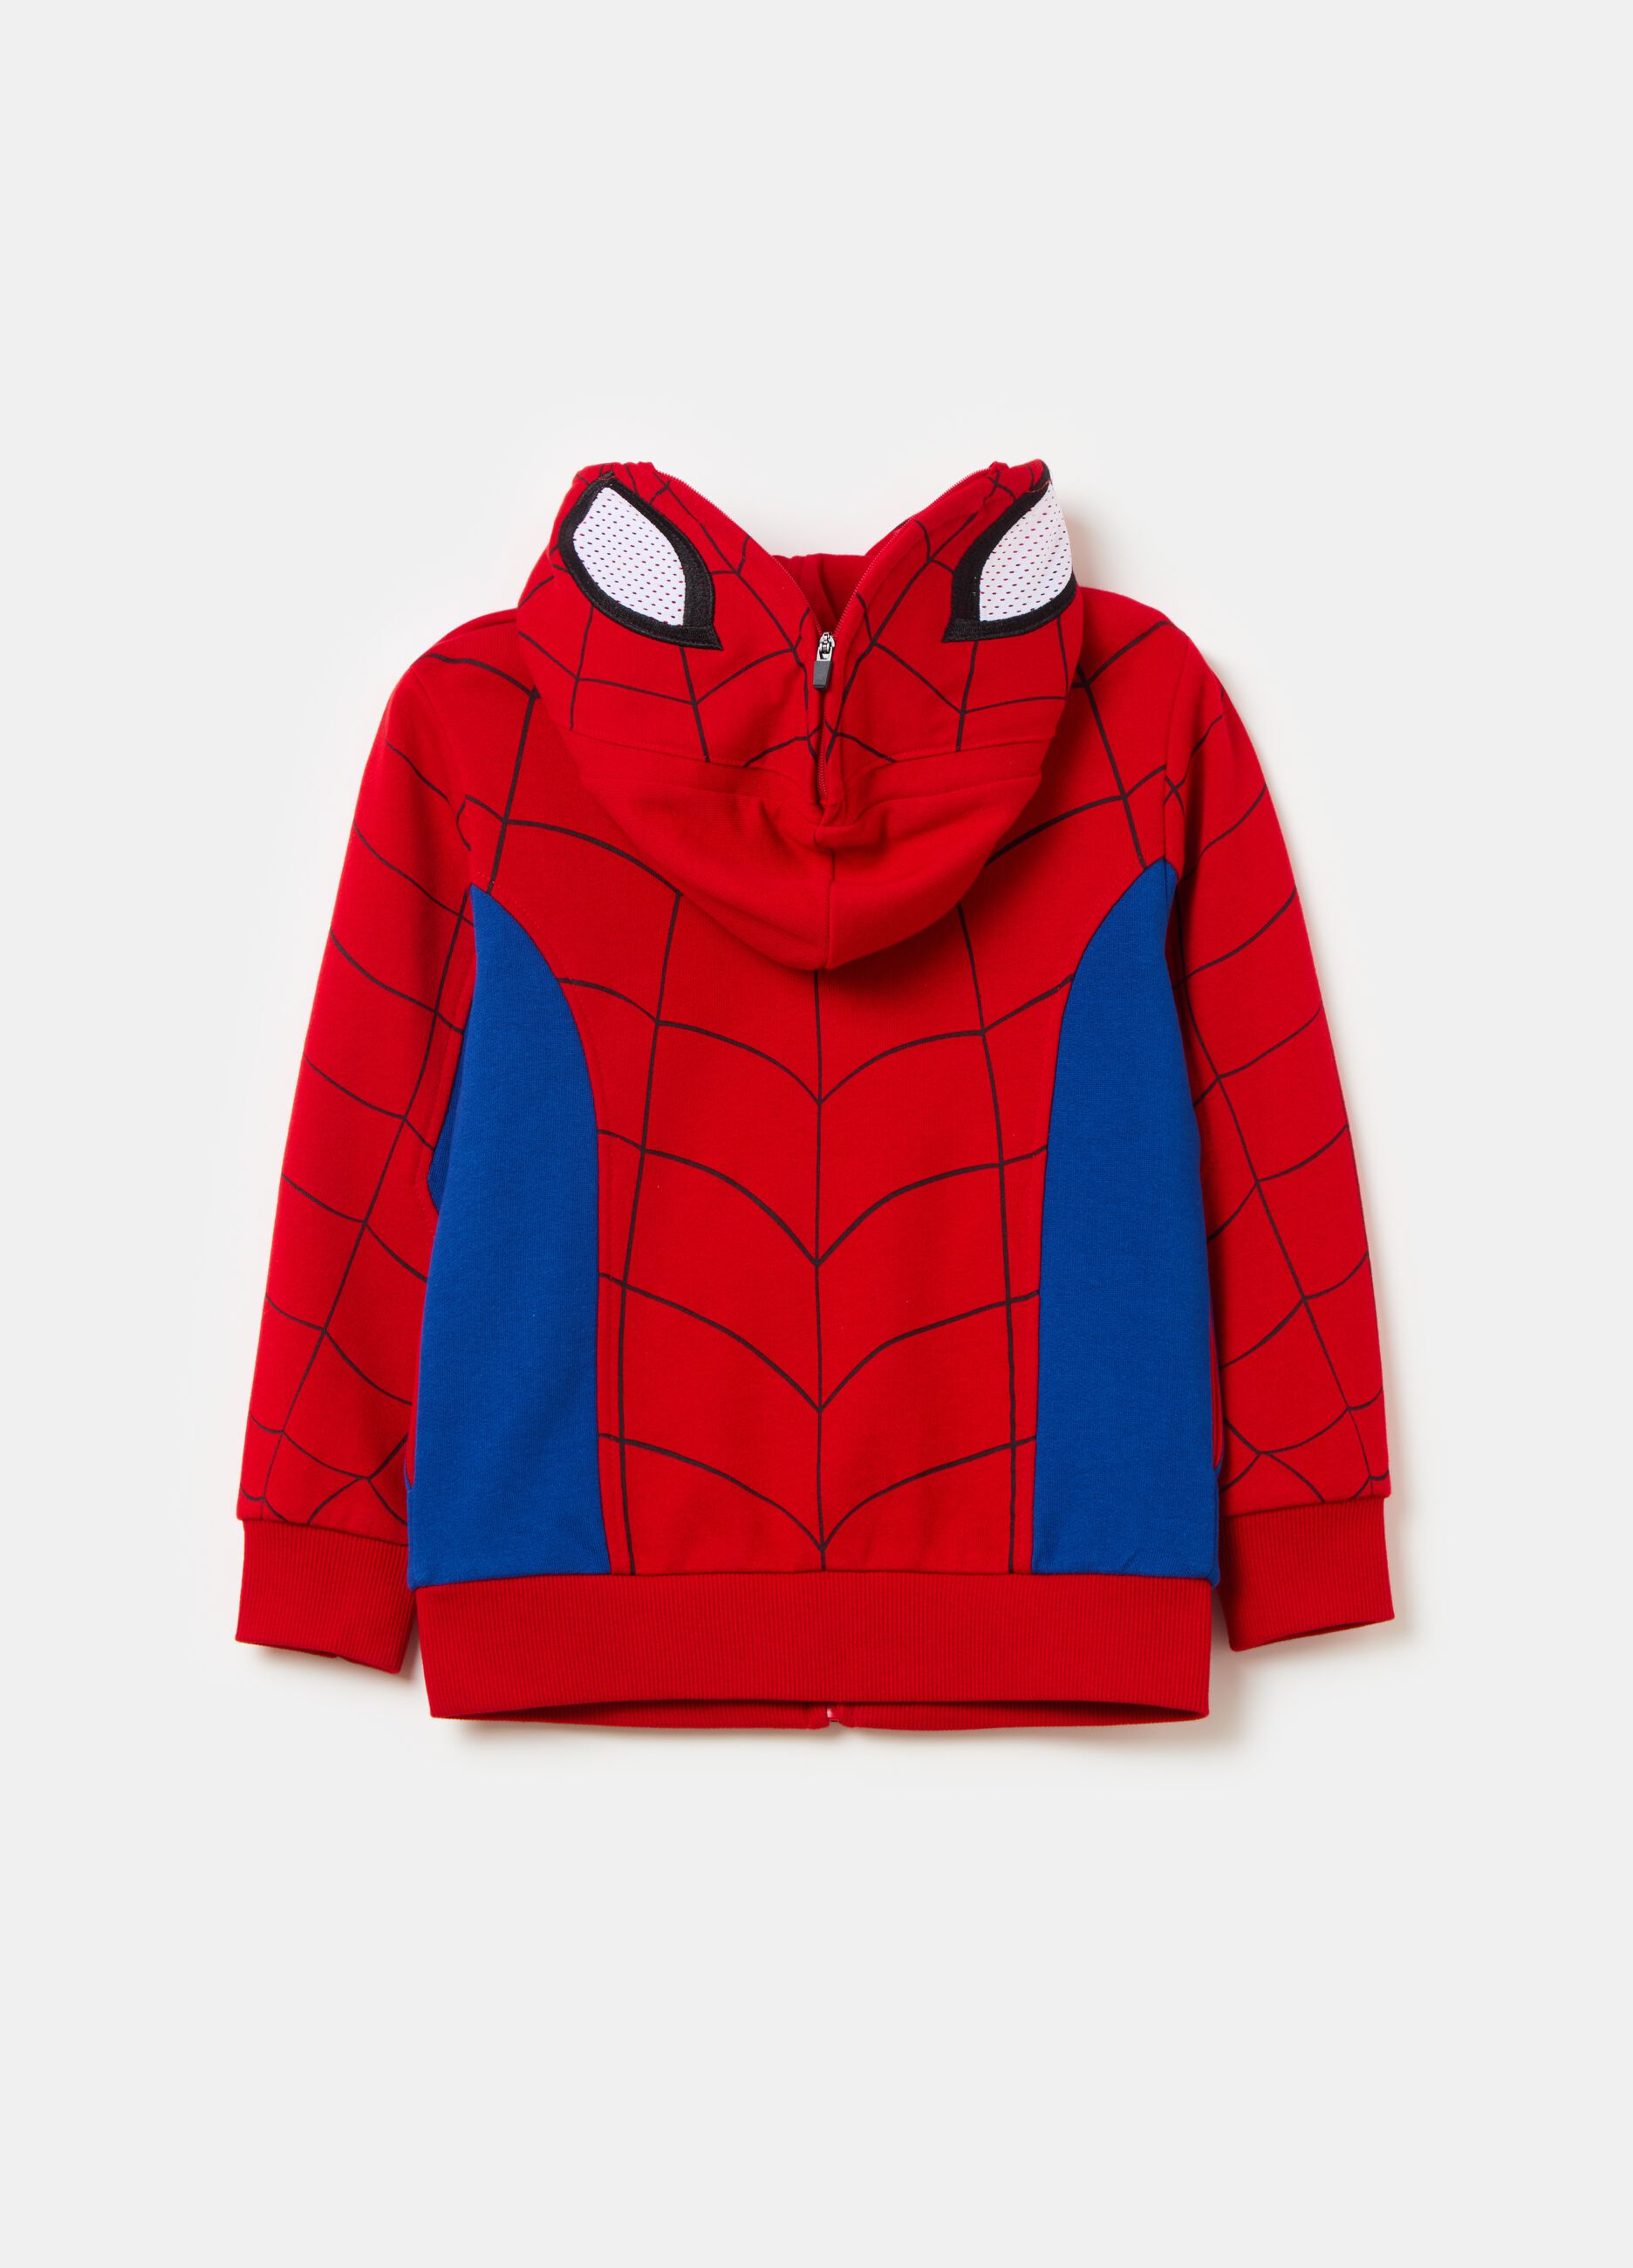 Full-zip sweatshirt with hood and Spider-Man print